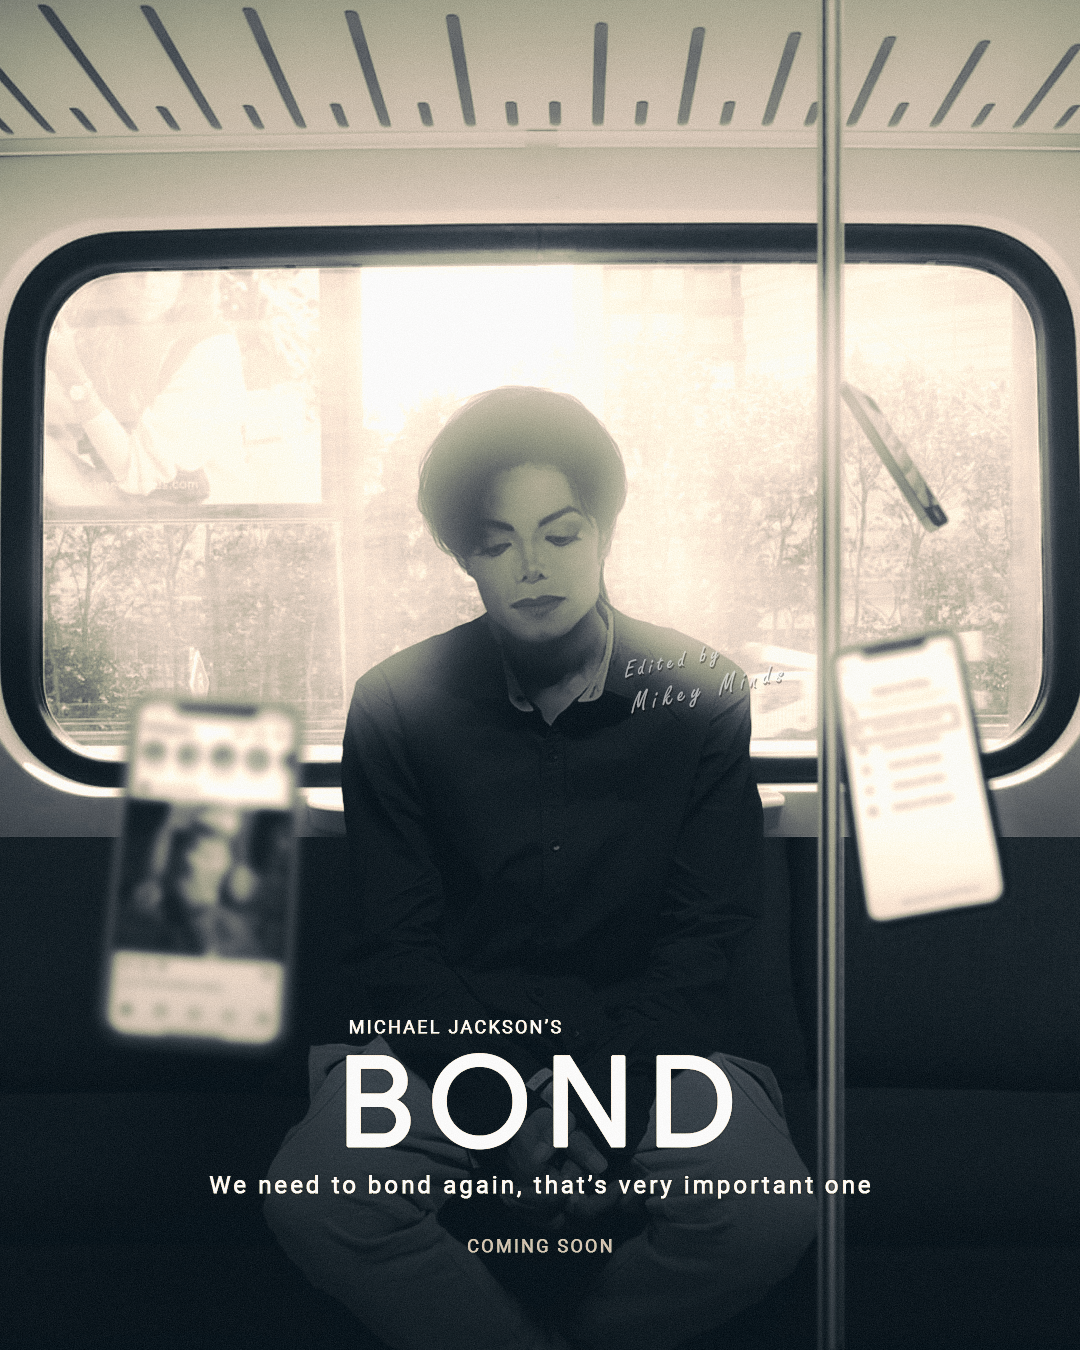 ” We need to bond again ”  – MJ